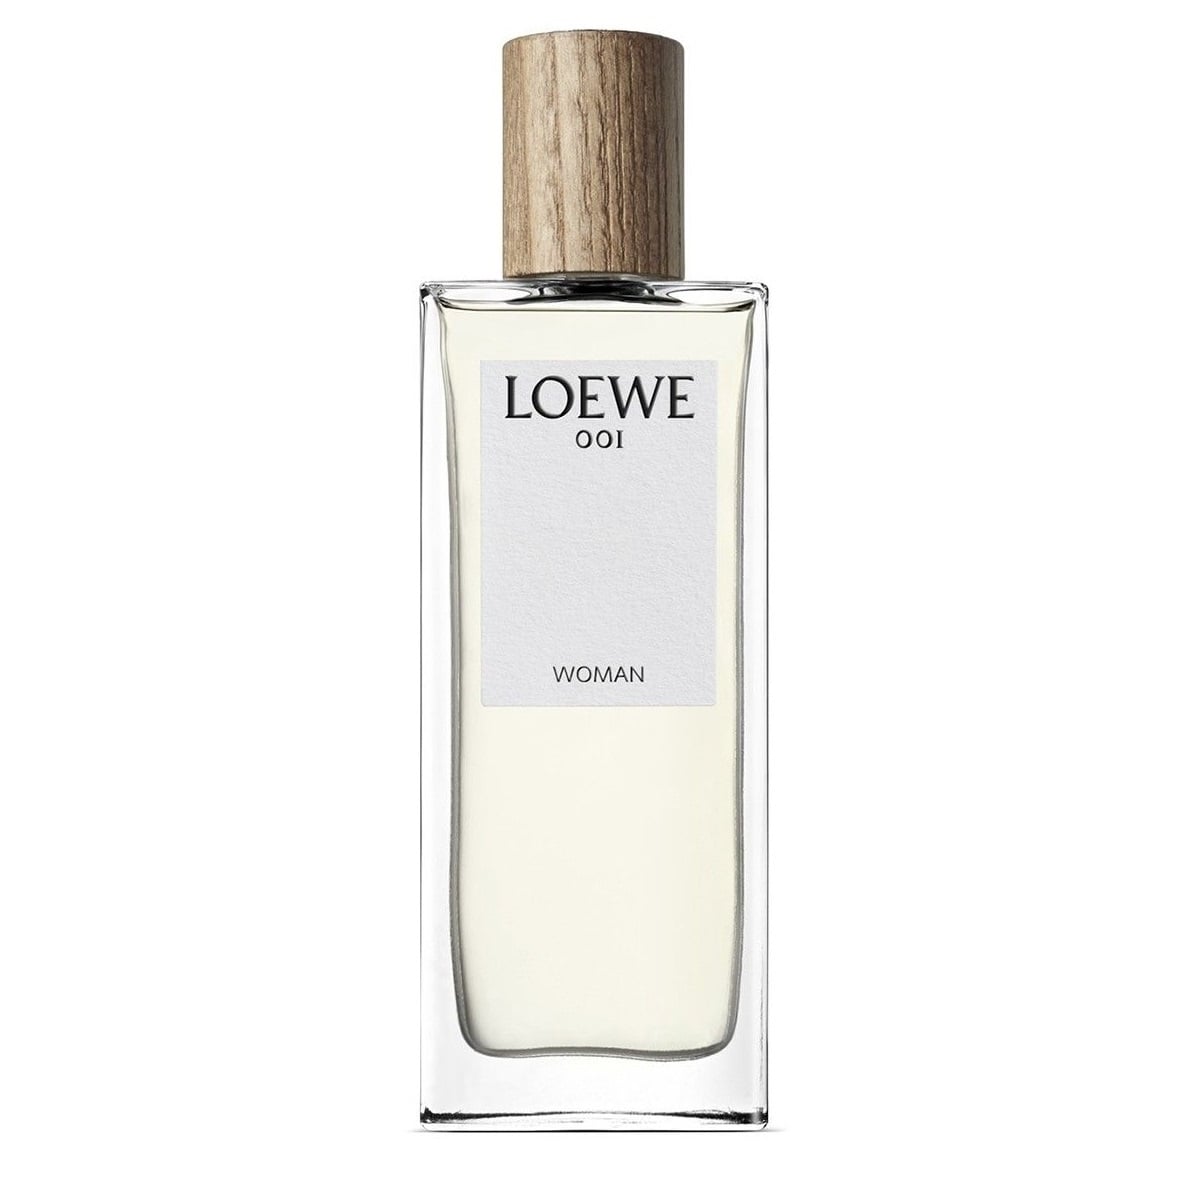 Loewe - 001 Woman, (ロエベ - 001 ウーマン)